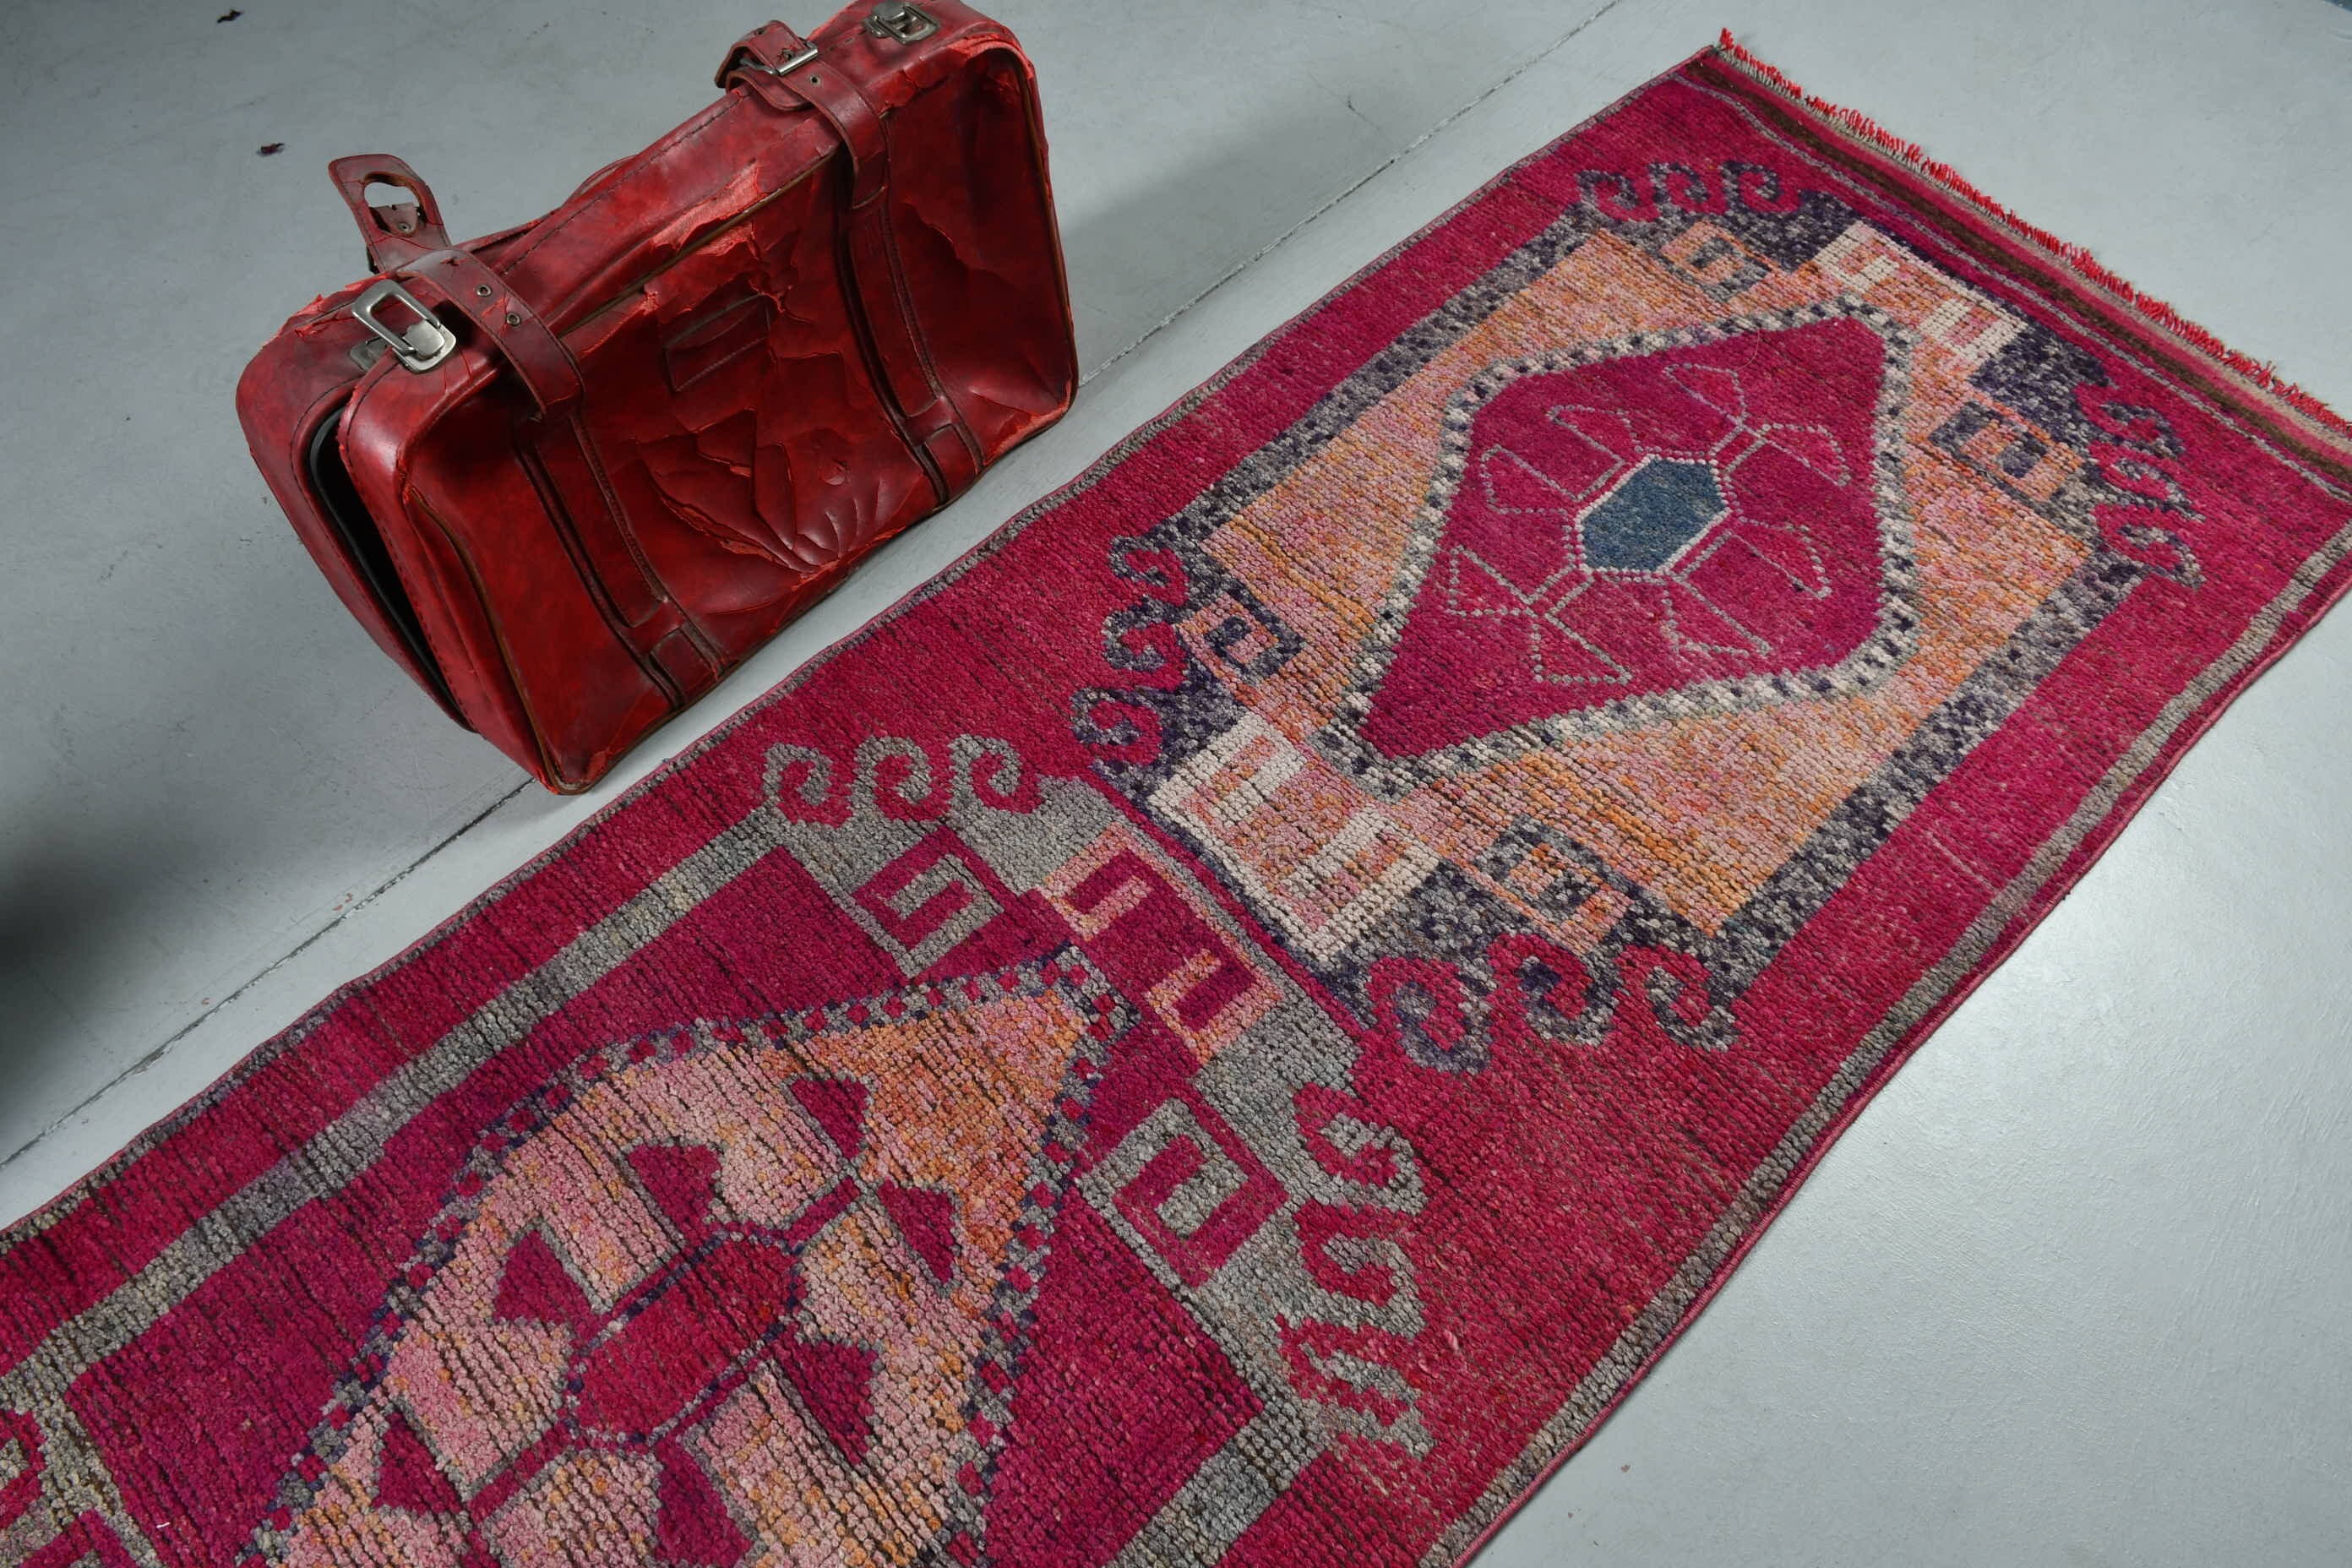 Vintage Rugs, Stair Rug, Pink Antique Rug, Turkish Rugs, 2.9x11.8 ft Runner Rug, Kitchen Rugs, Cool Rugs, Rugs for Stair, Moroccan Rugs